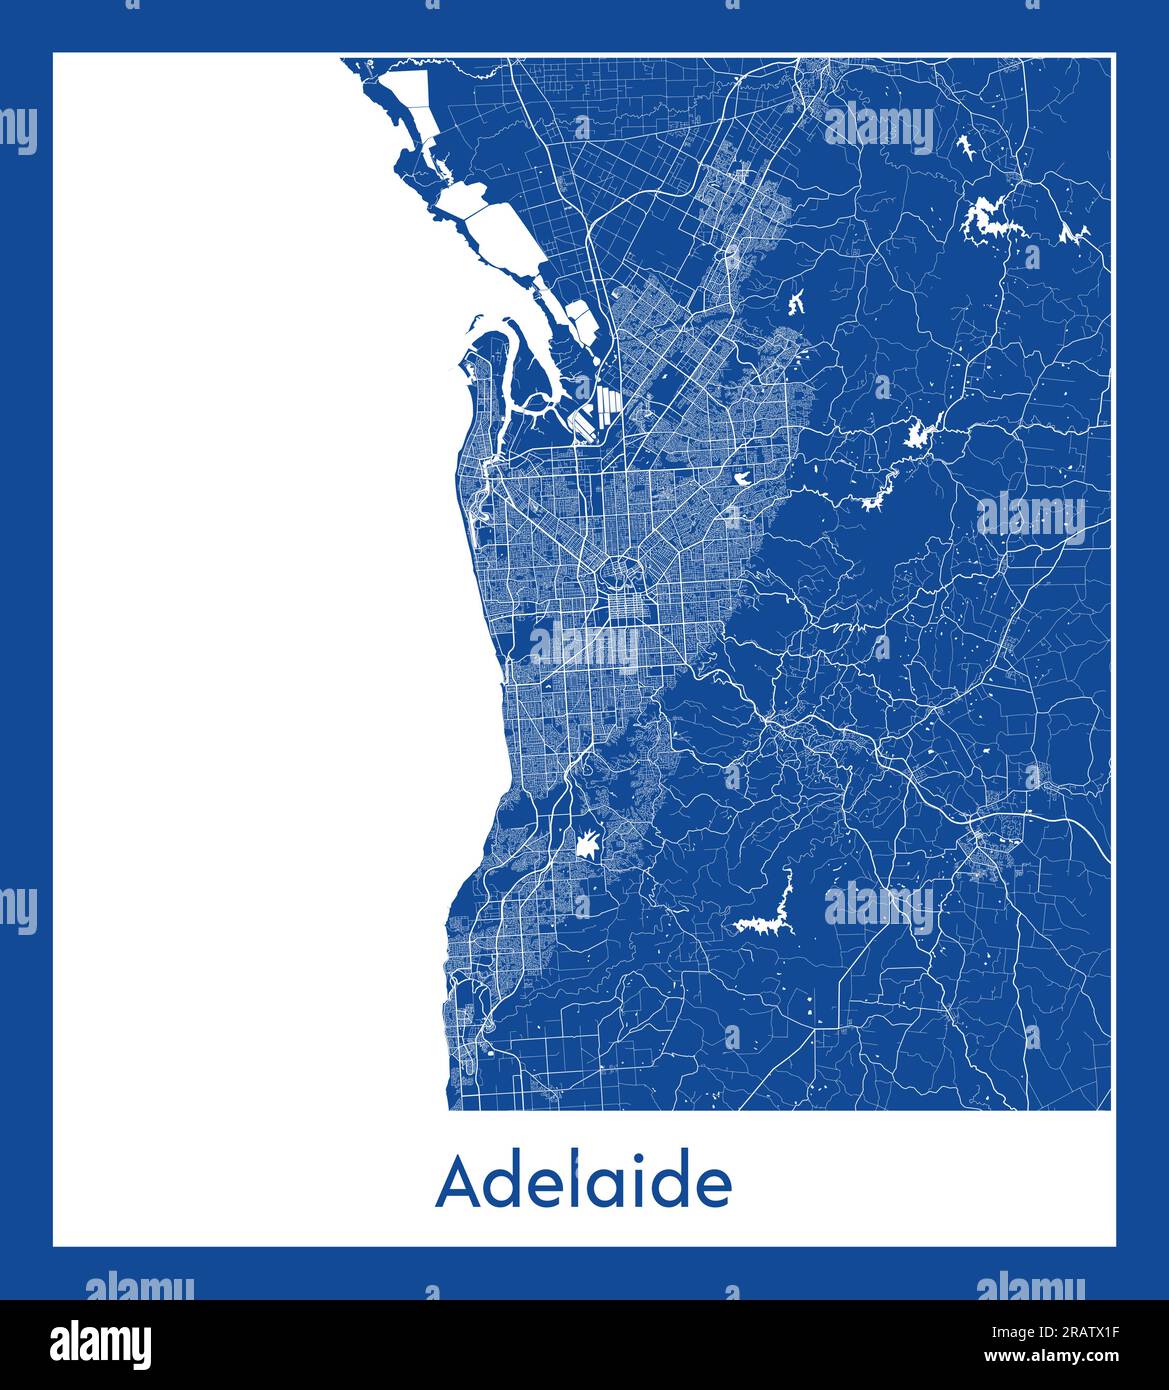 Adelaide Australia City map blue print vector illustration Stock Vector